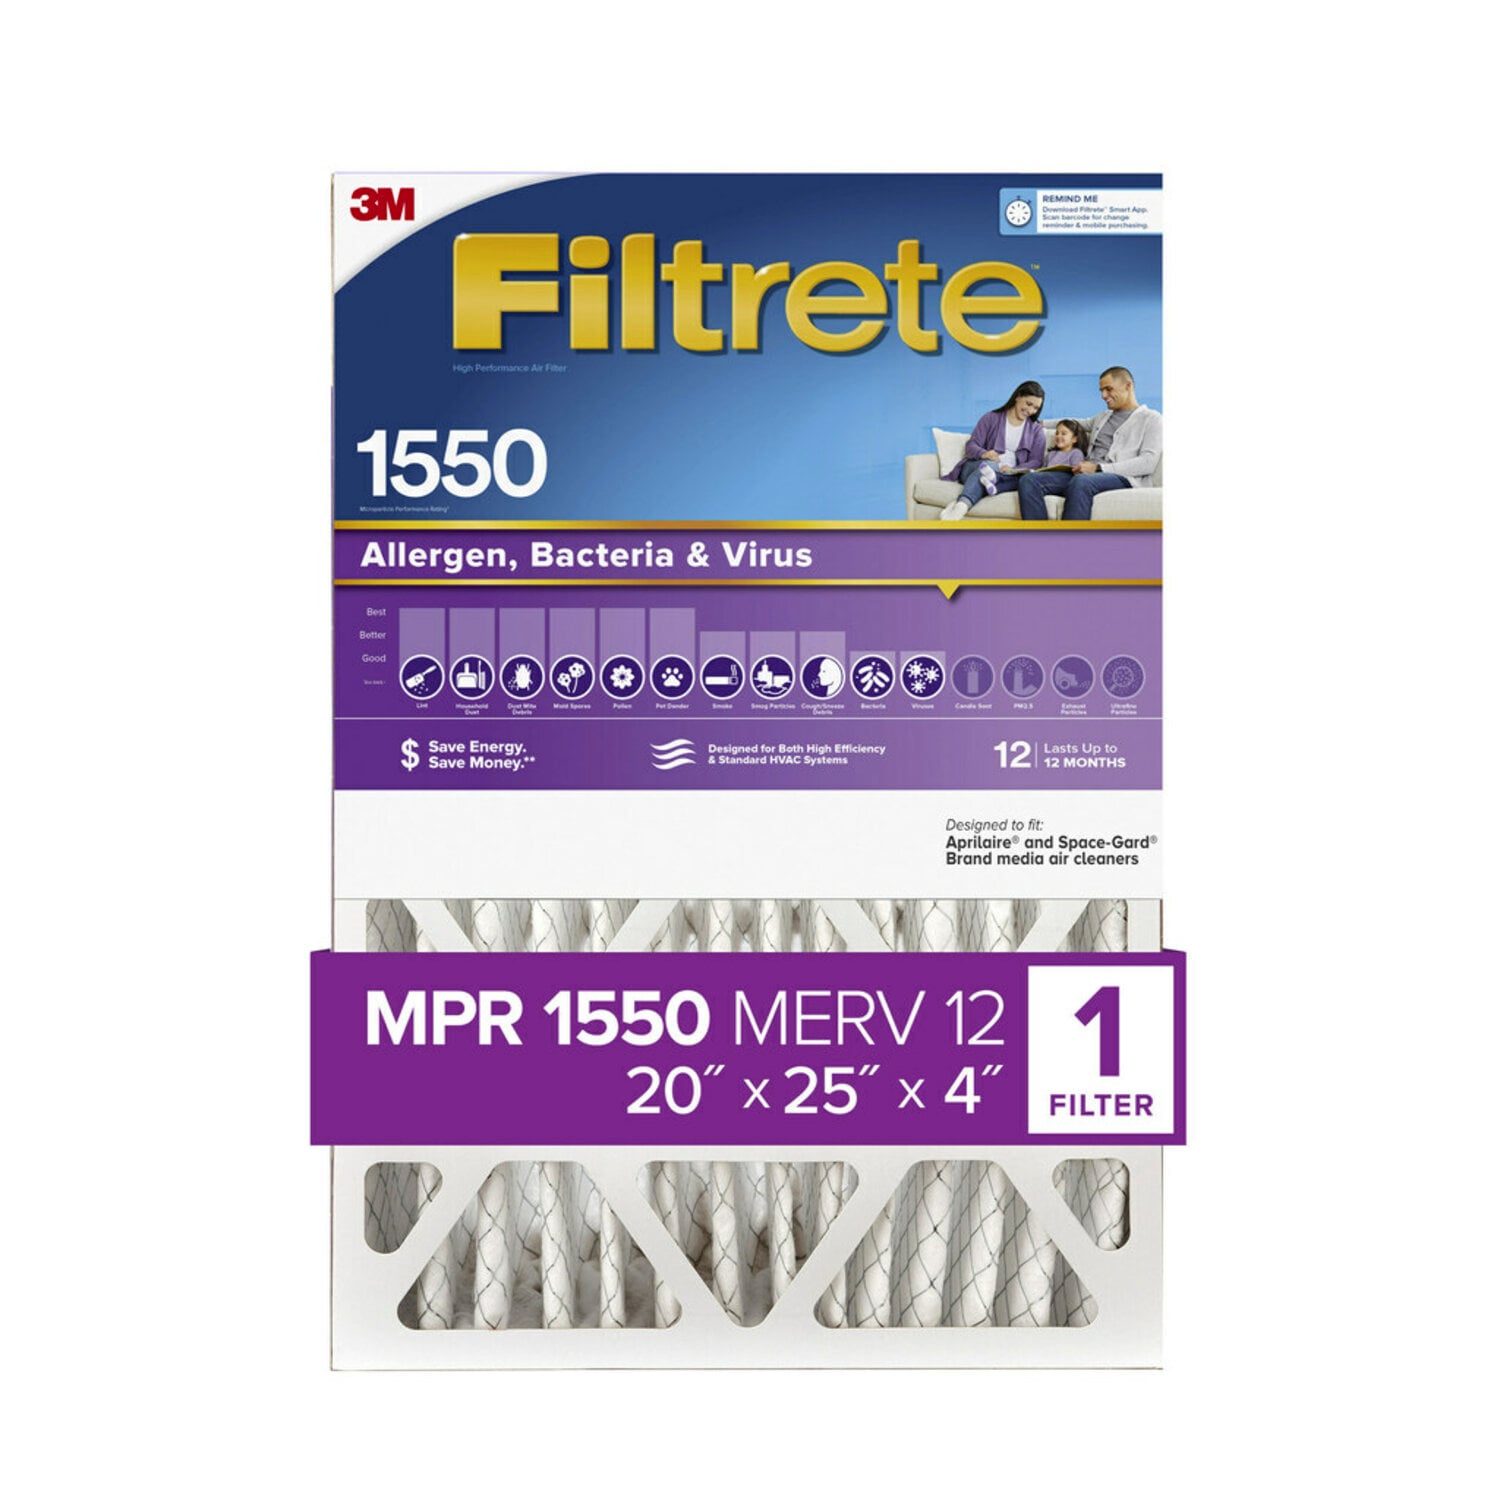 7100097247 - Filtrete Ultra Allergen Reduction Deep Pleat Filter NDP03-4IN-4, 20 in x 25 in x 4 in (50.3 cm x 62.2 cm x 10.6 cm)